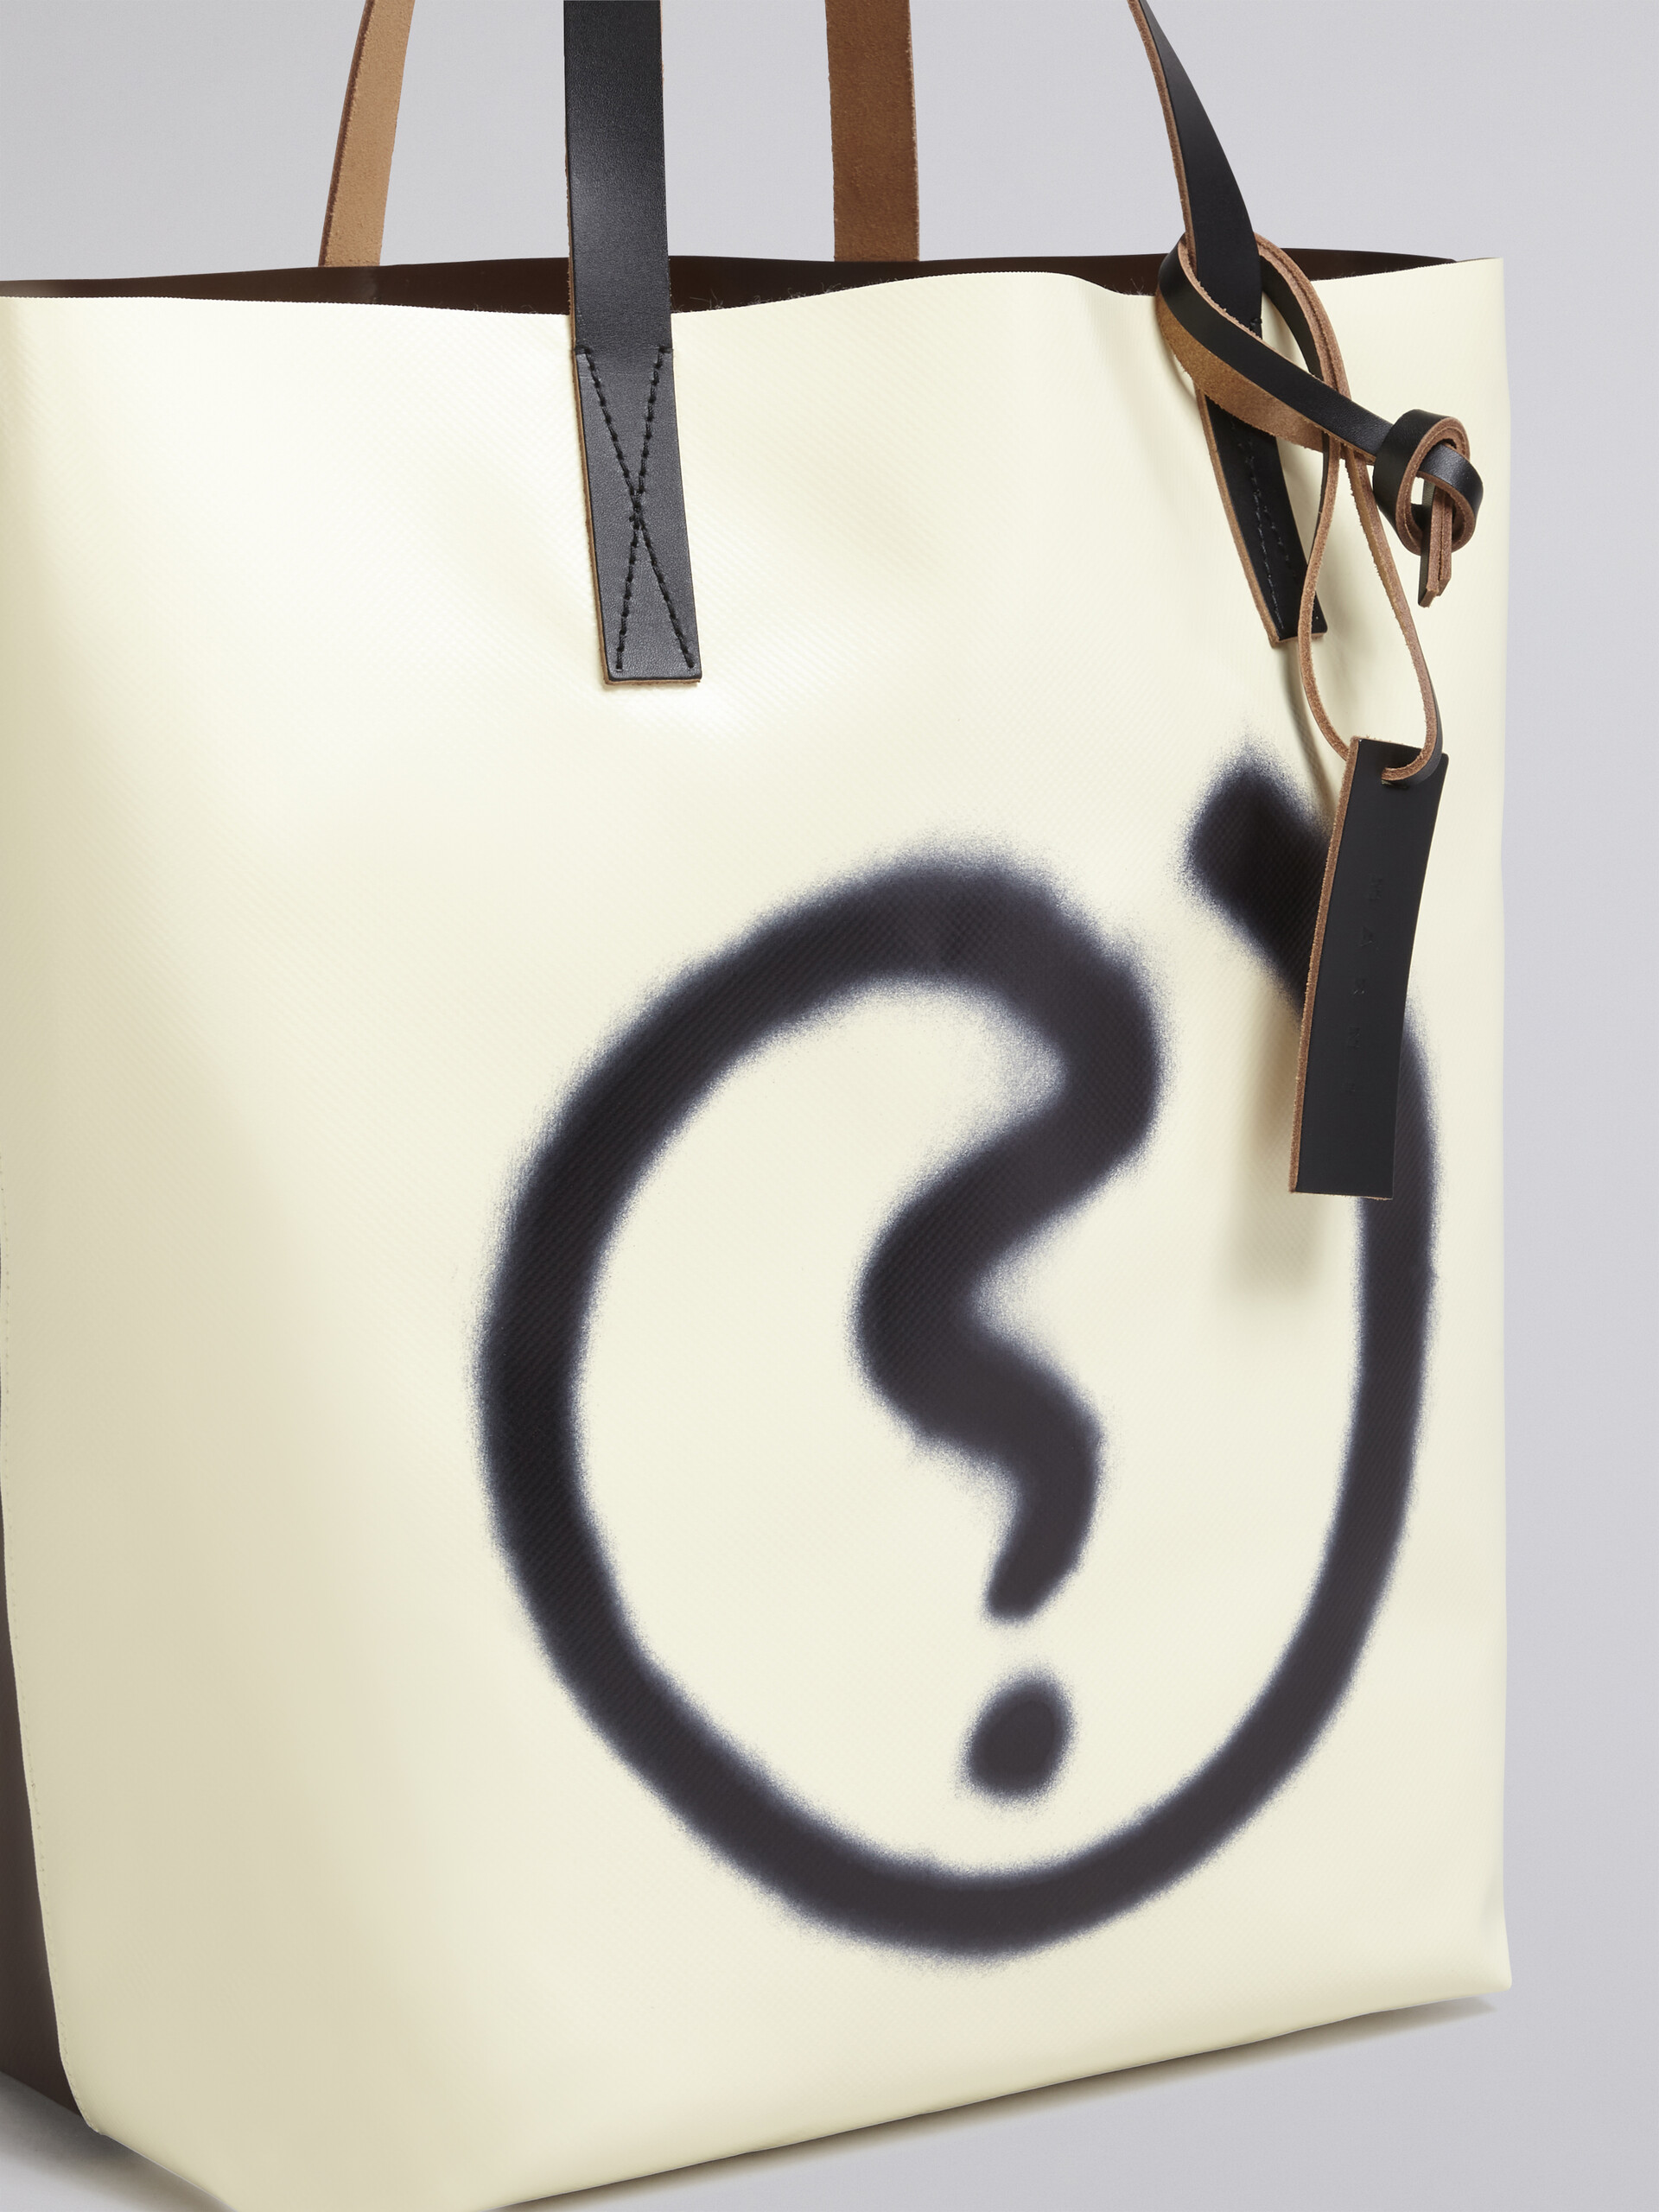 TRIBECA PVC-Shopper in Hochformat mit Swirl Print - Shopper - Image 5